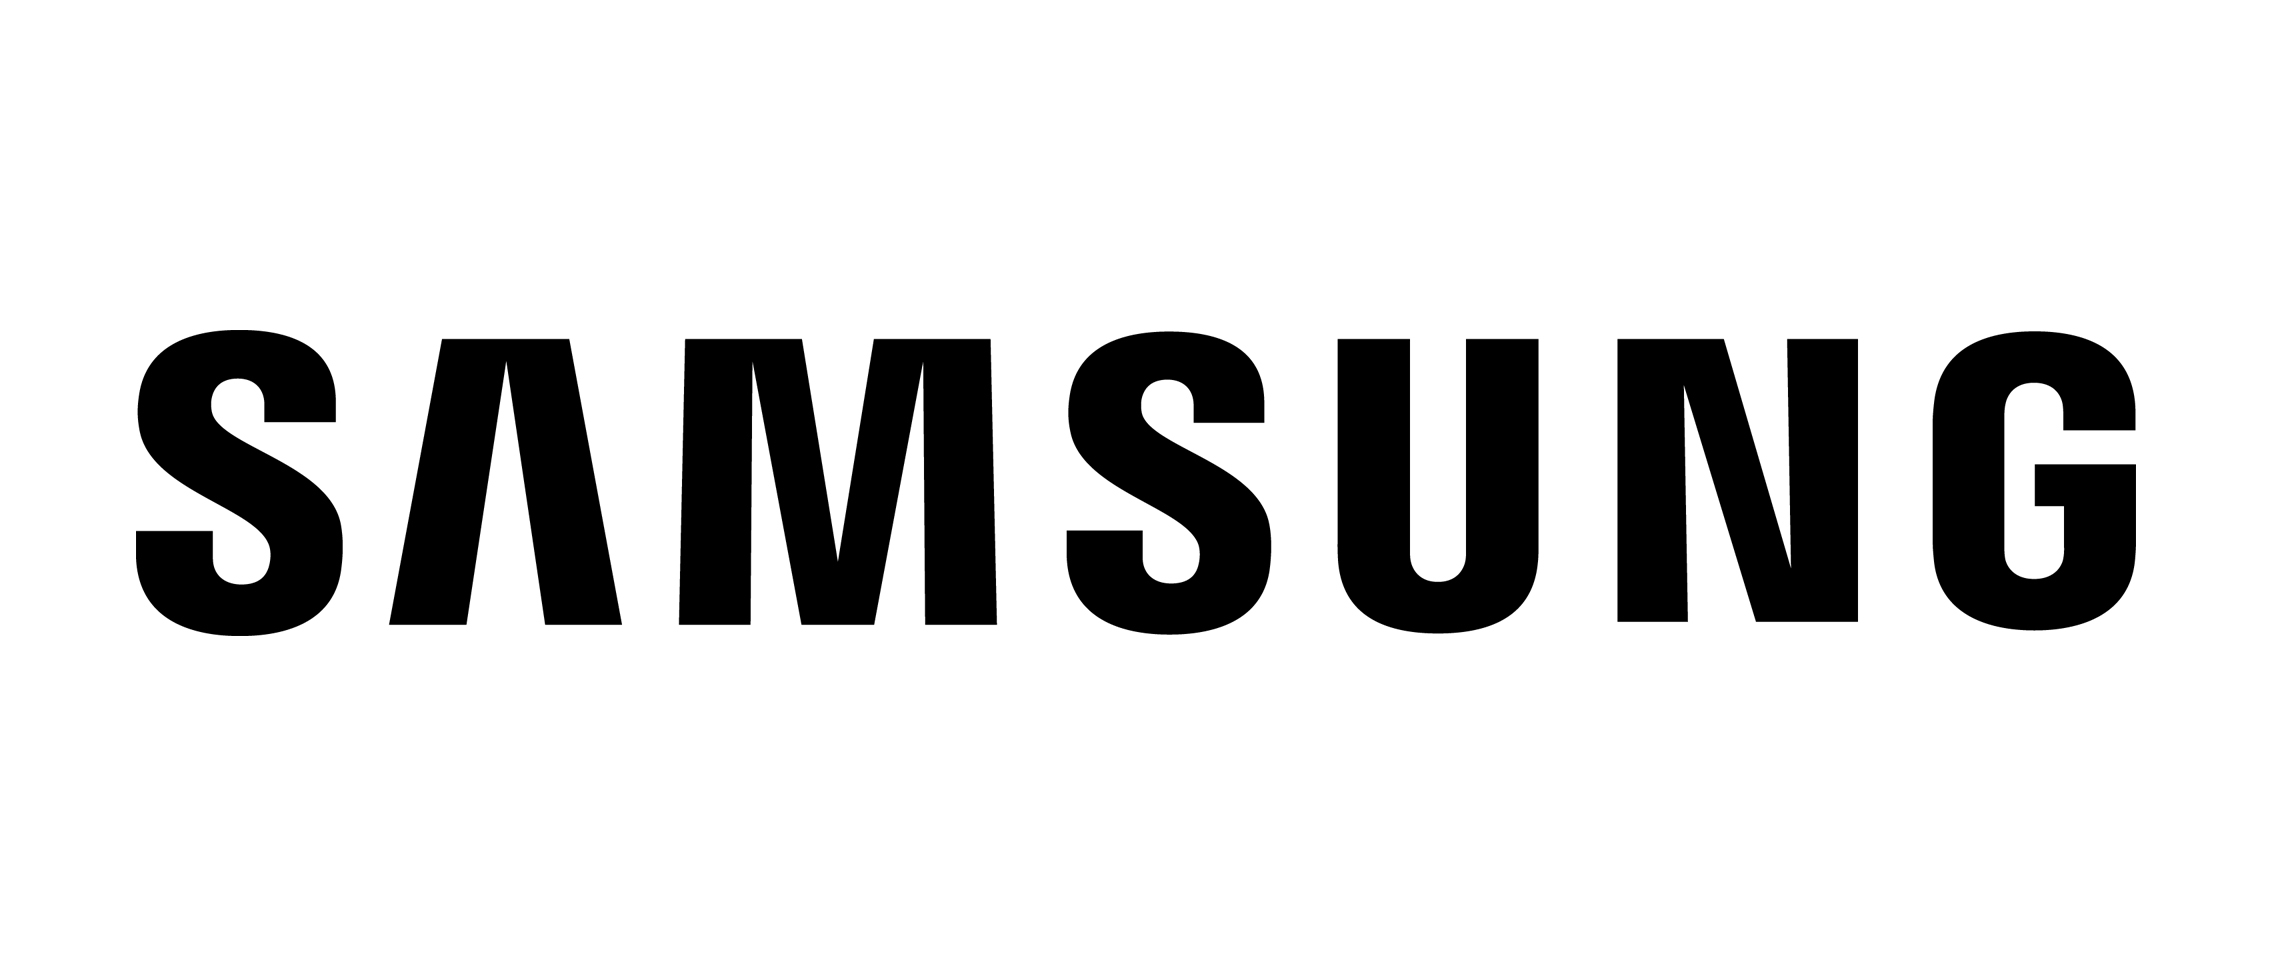 Samsung Logo Black Wallpapers